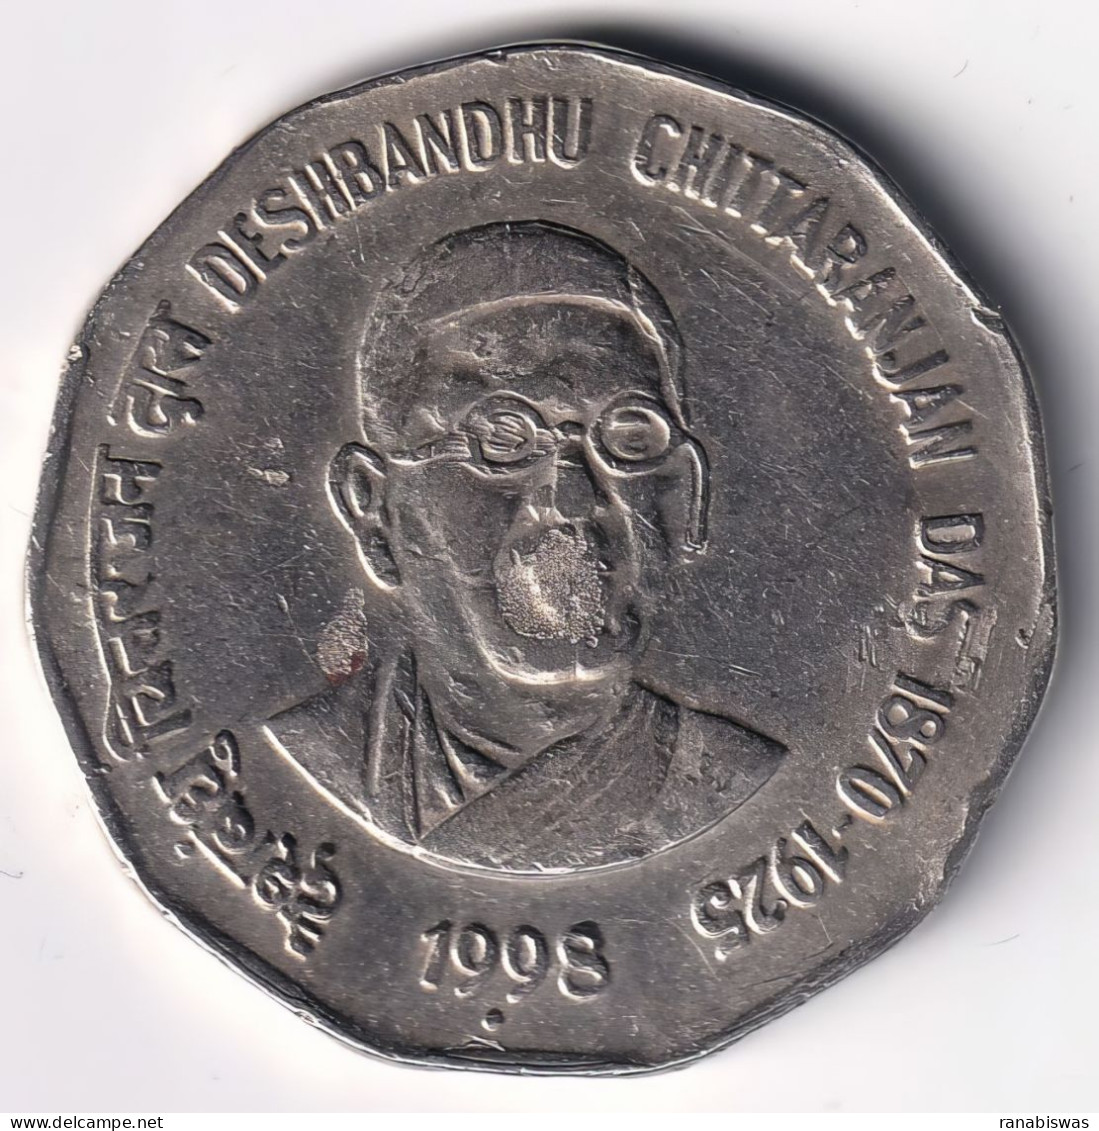 INDIA COIN LOT 79, 2 RUPEES 1998, CHITTARANJAN DAS, NOIDA MINT, XF - Inde